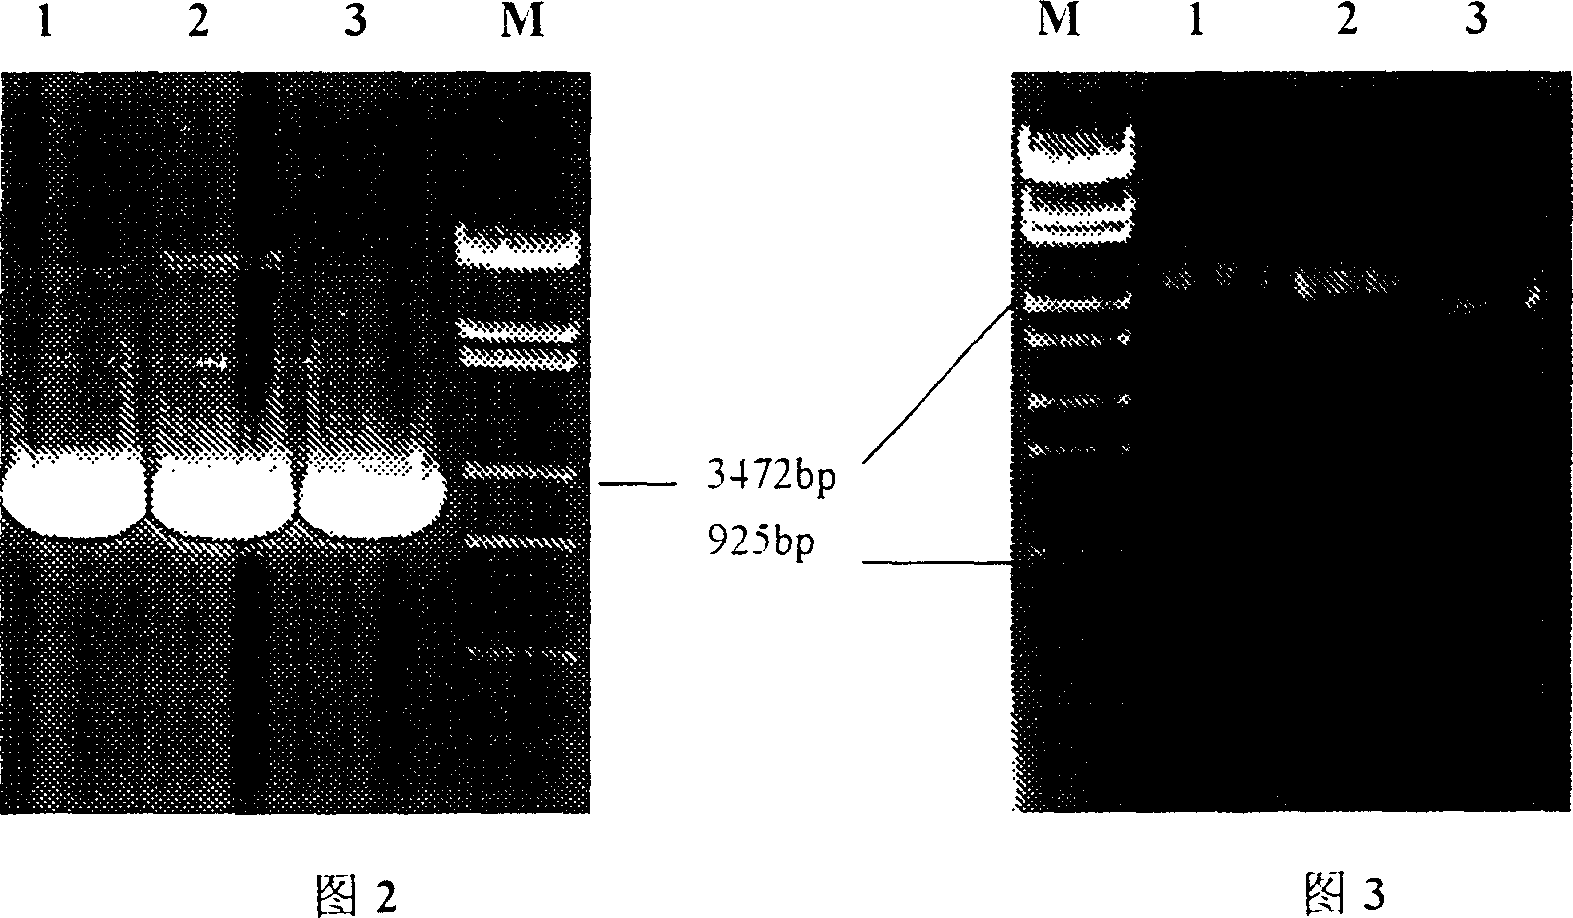 Gene of internal cutting glucanase of Bacillus megatherium and preparation process thereof